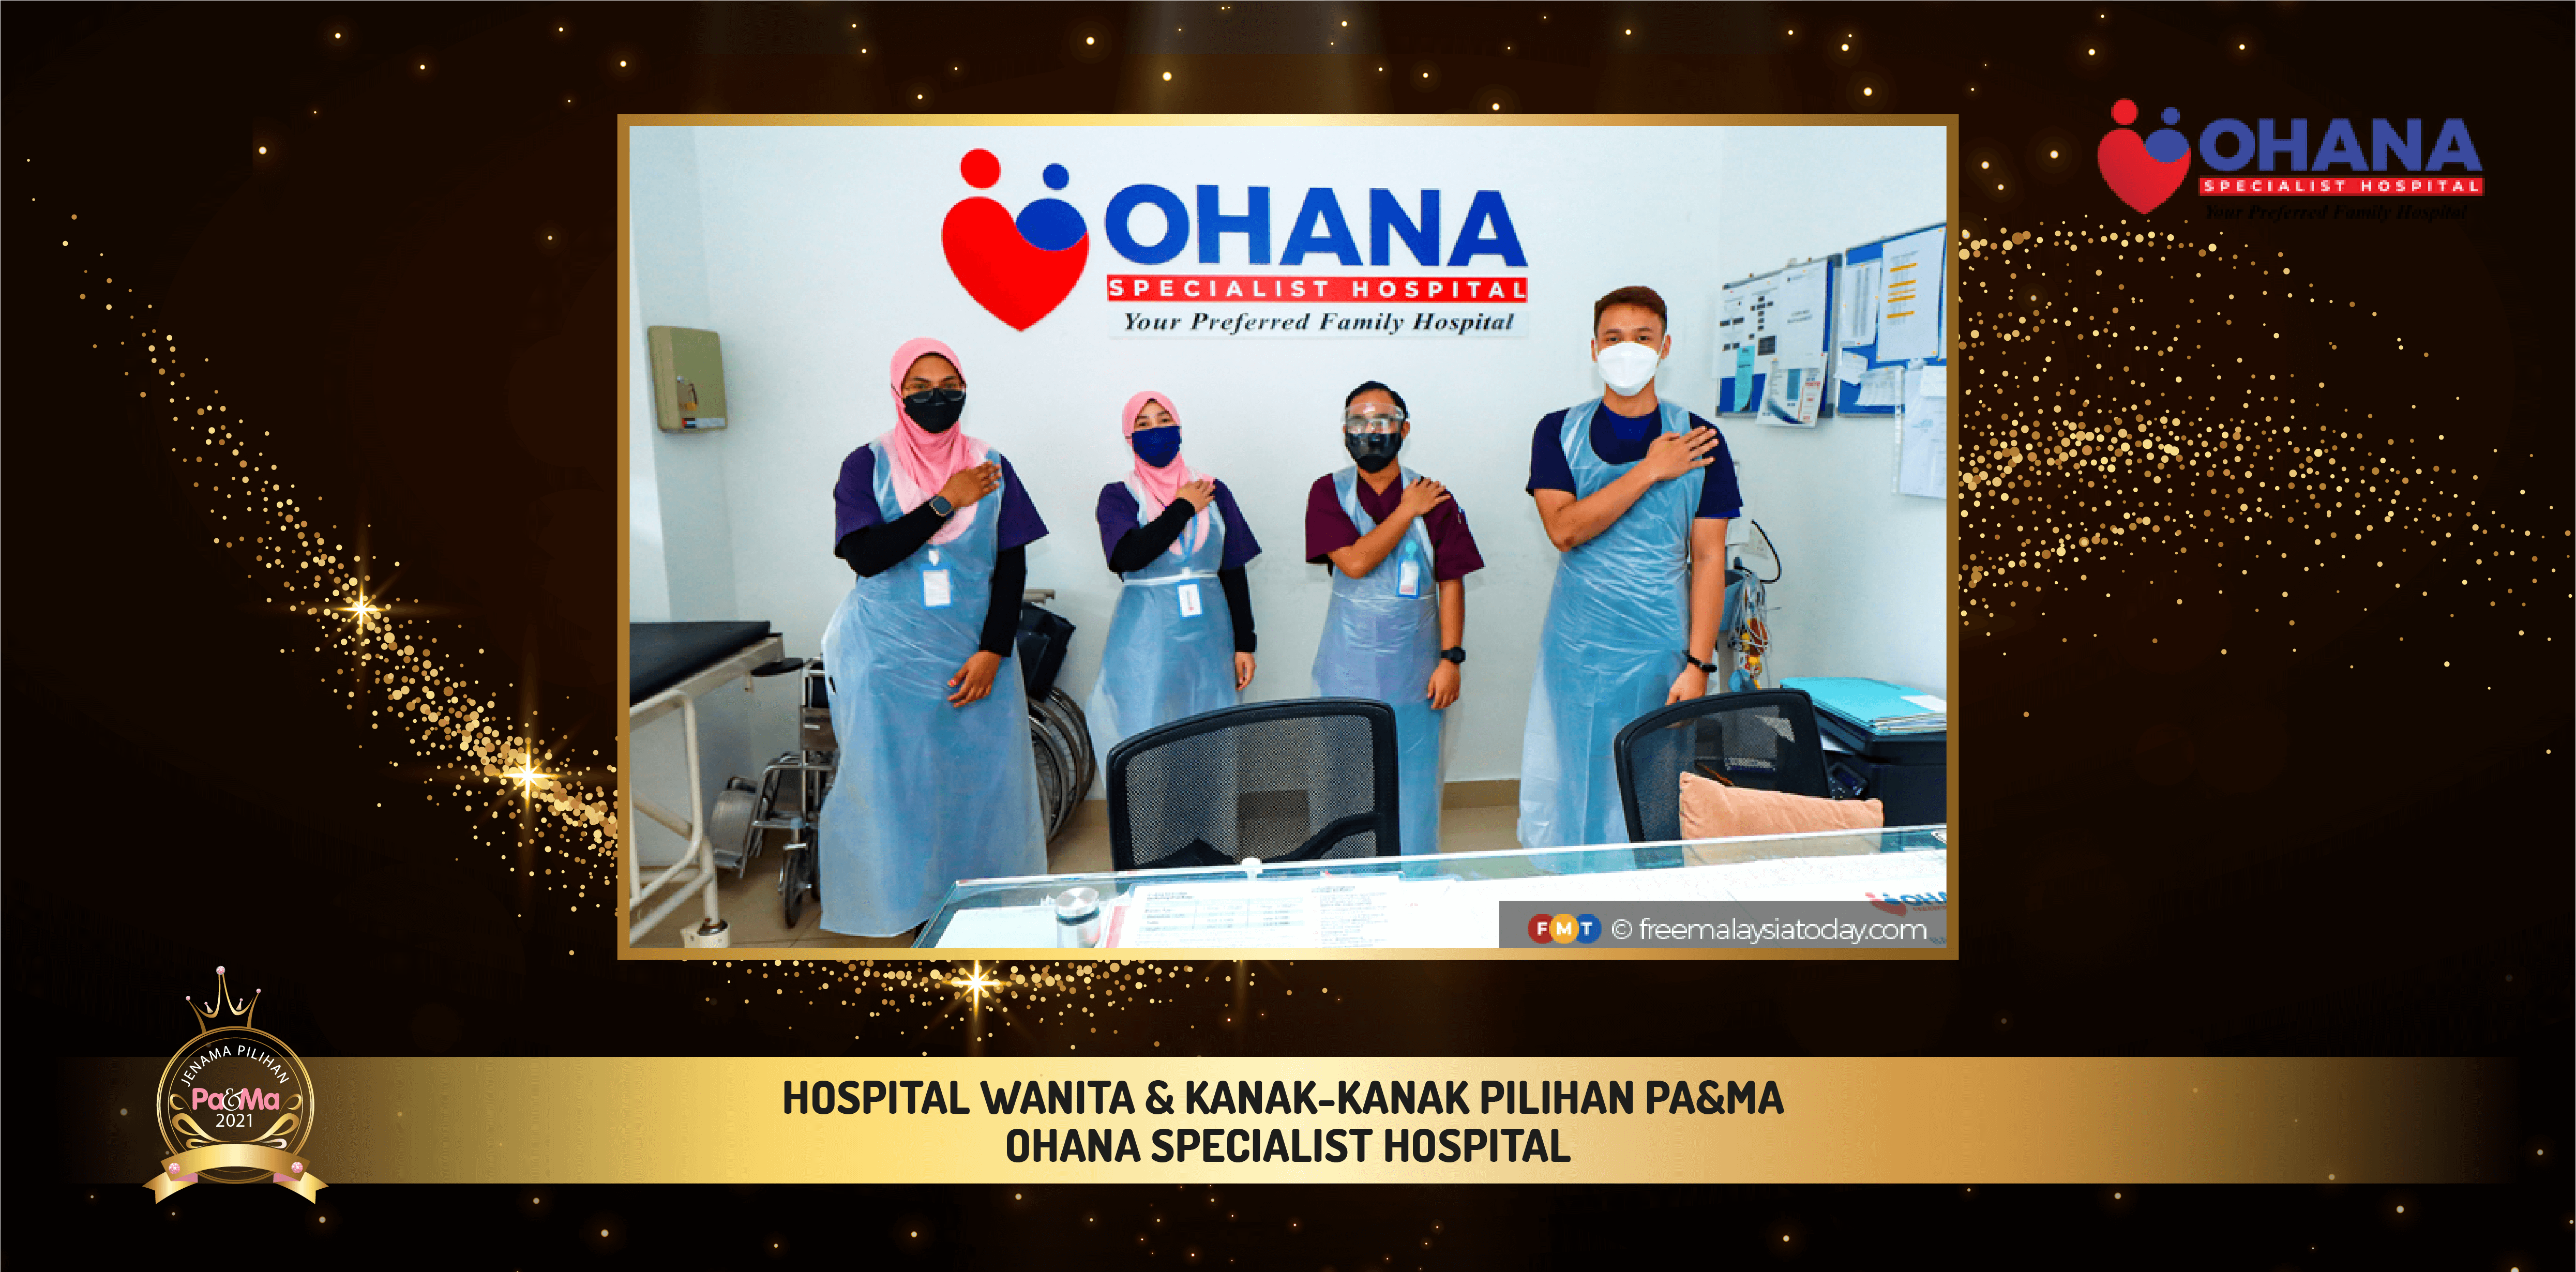 Ohana specialist hospital